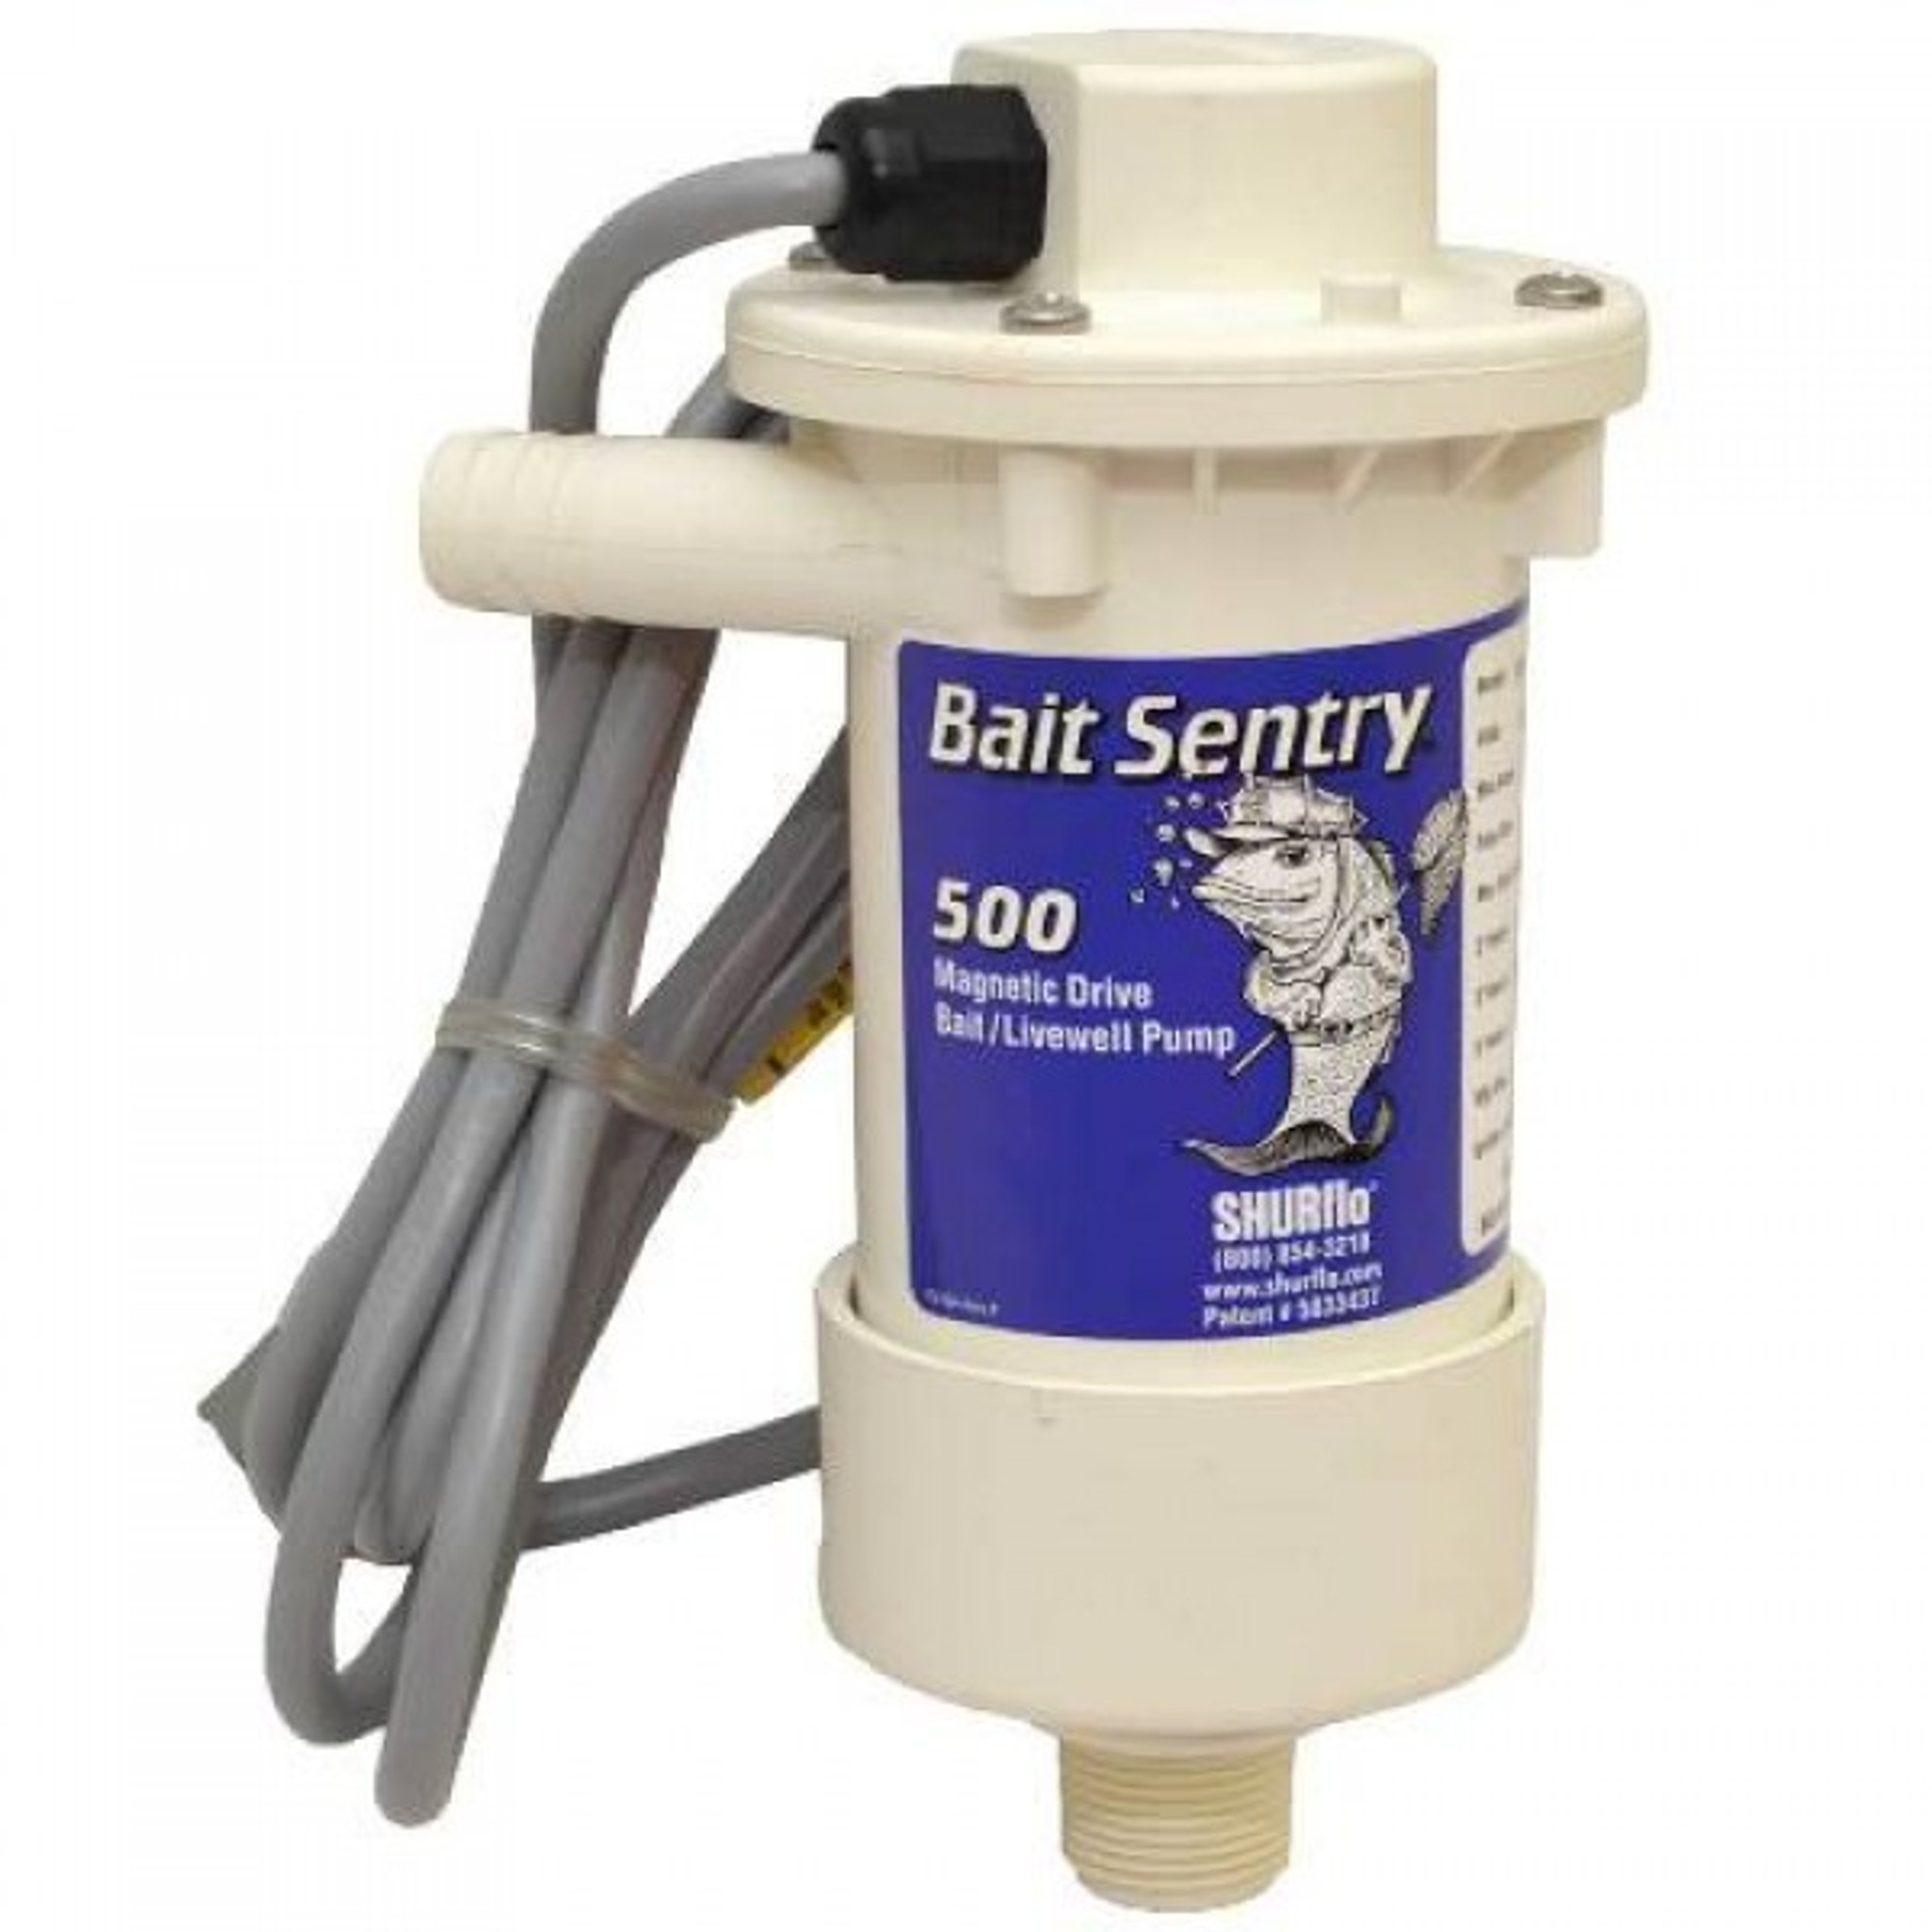 Shurflo Bait Sentry Livewell Pump 500 GPH 